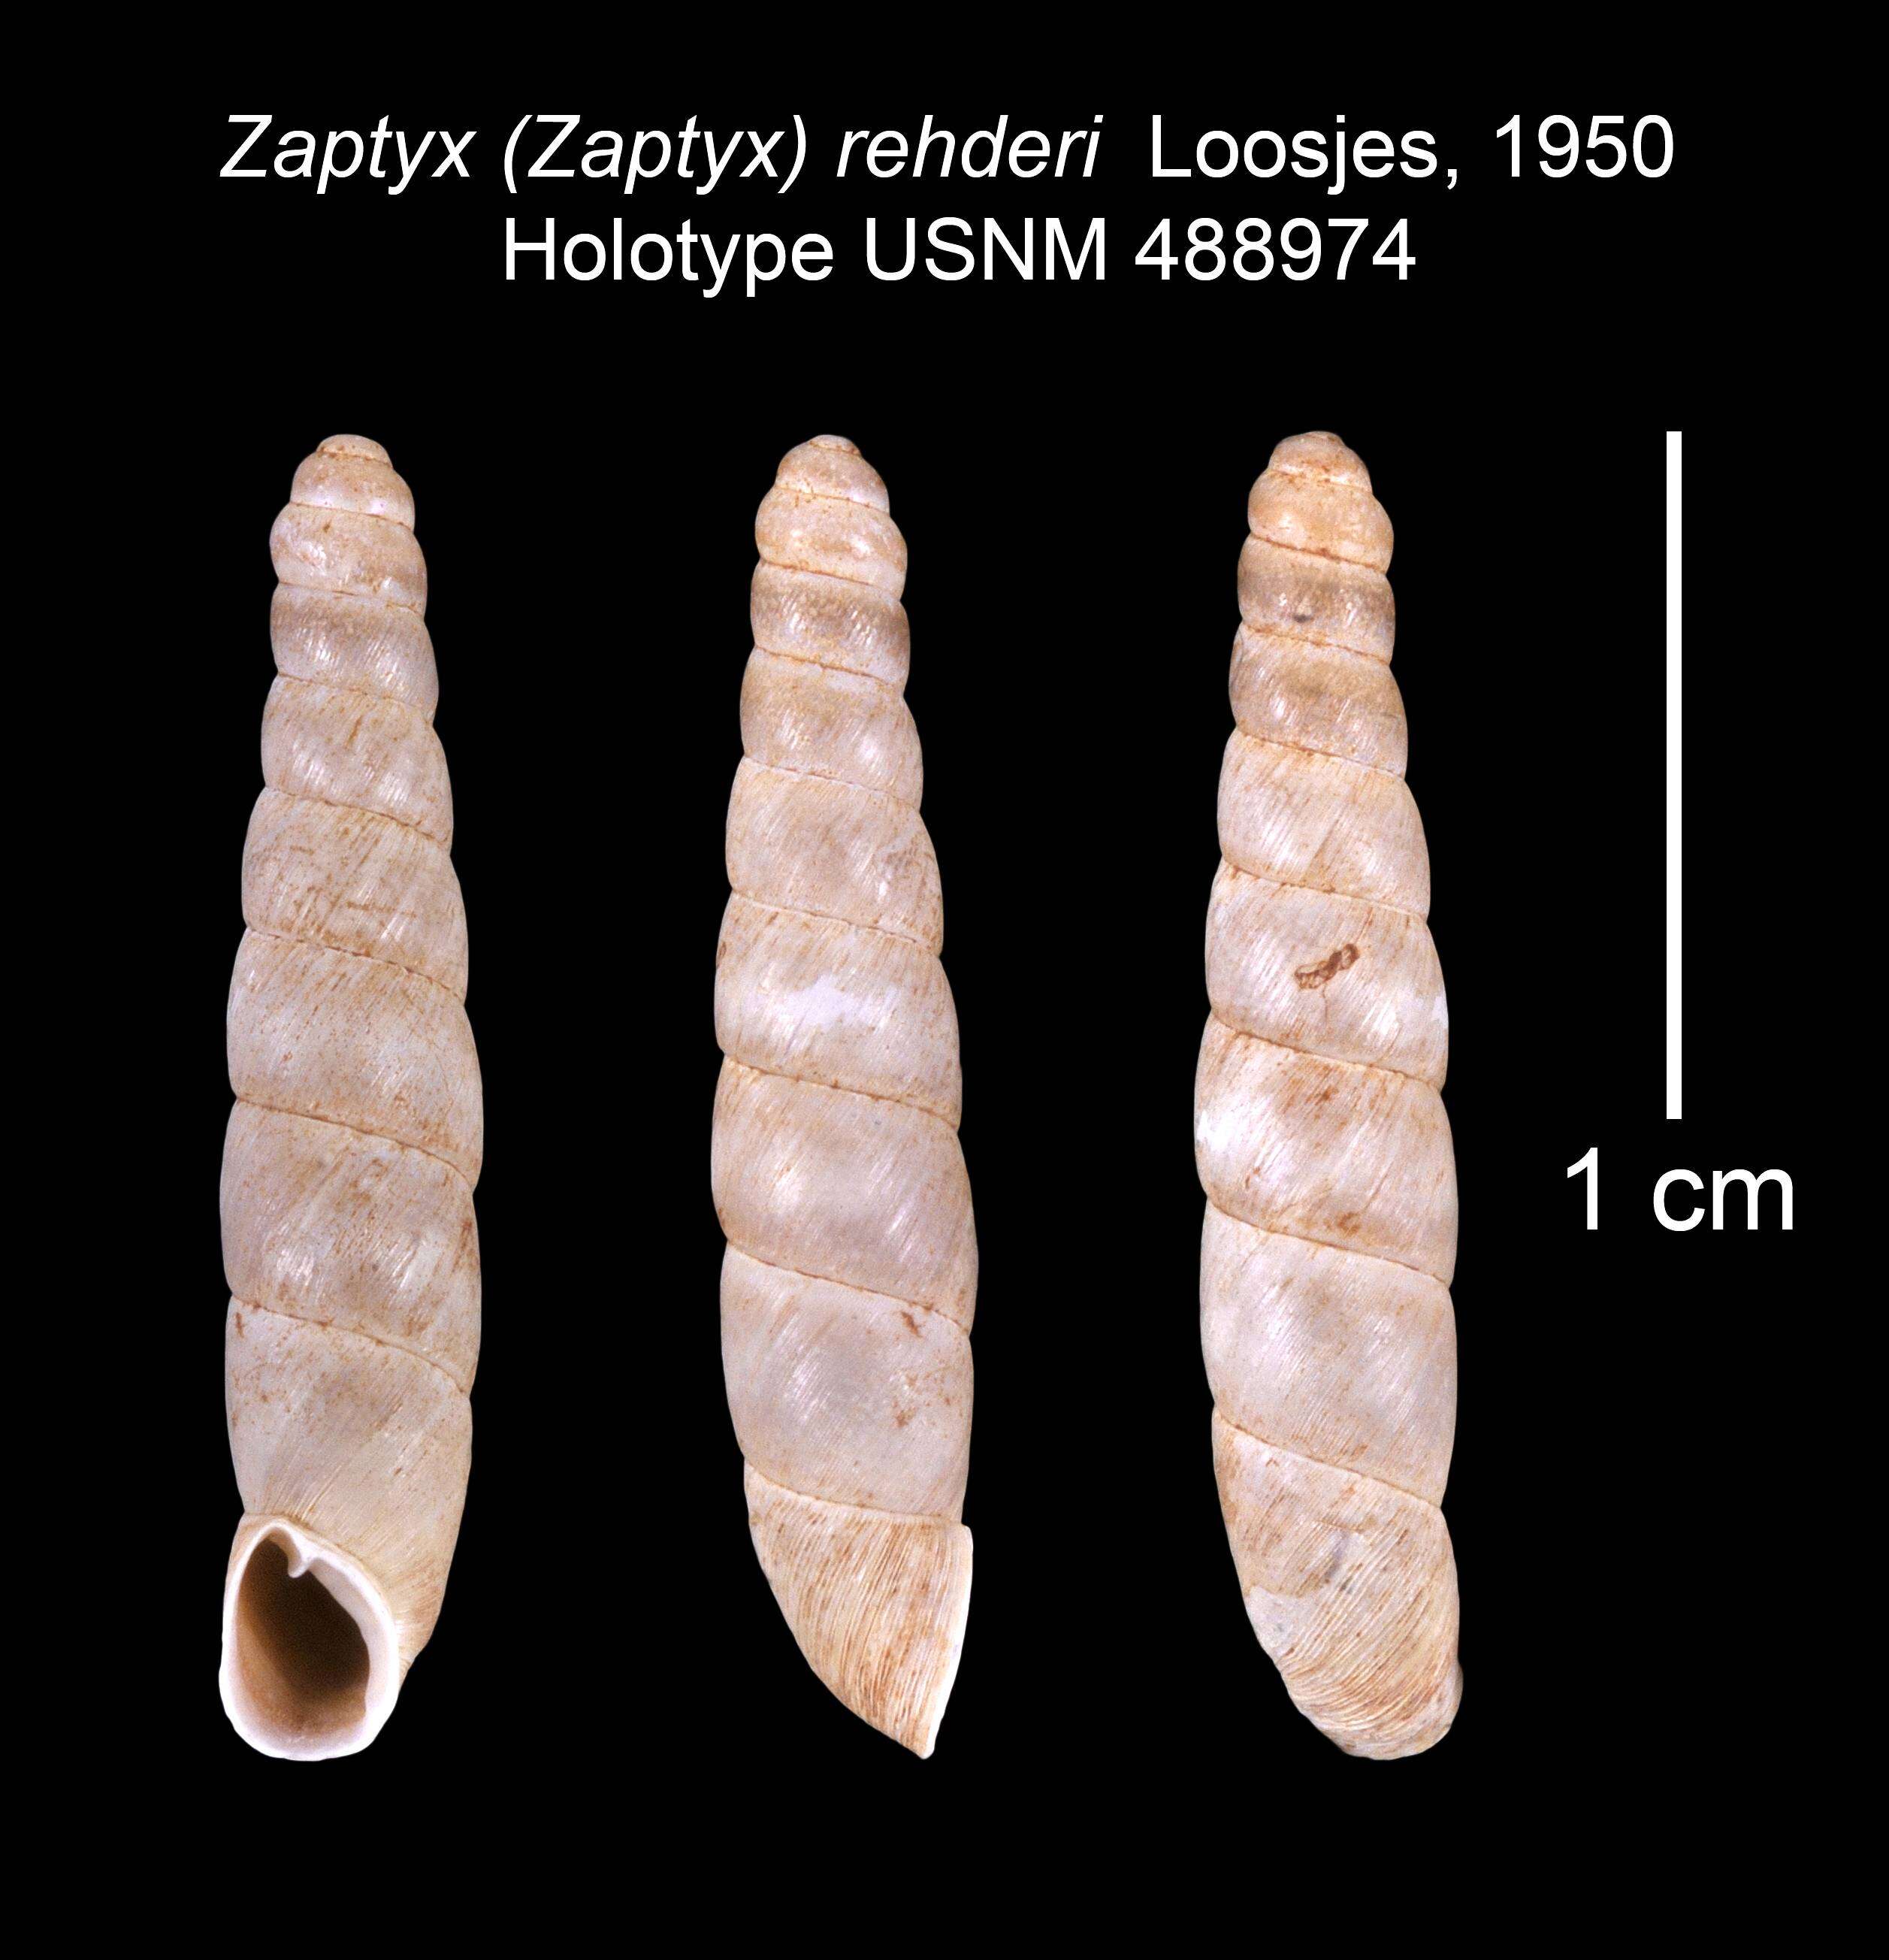 Image of Zaptyx rehderi Loosjes 1950